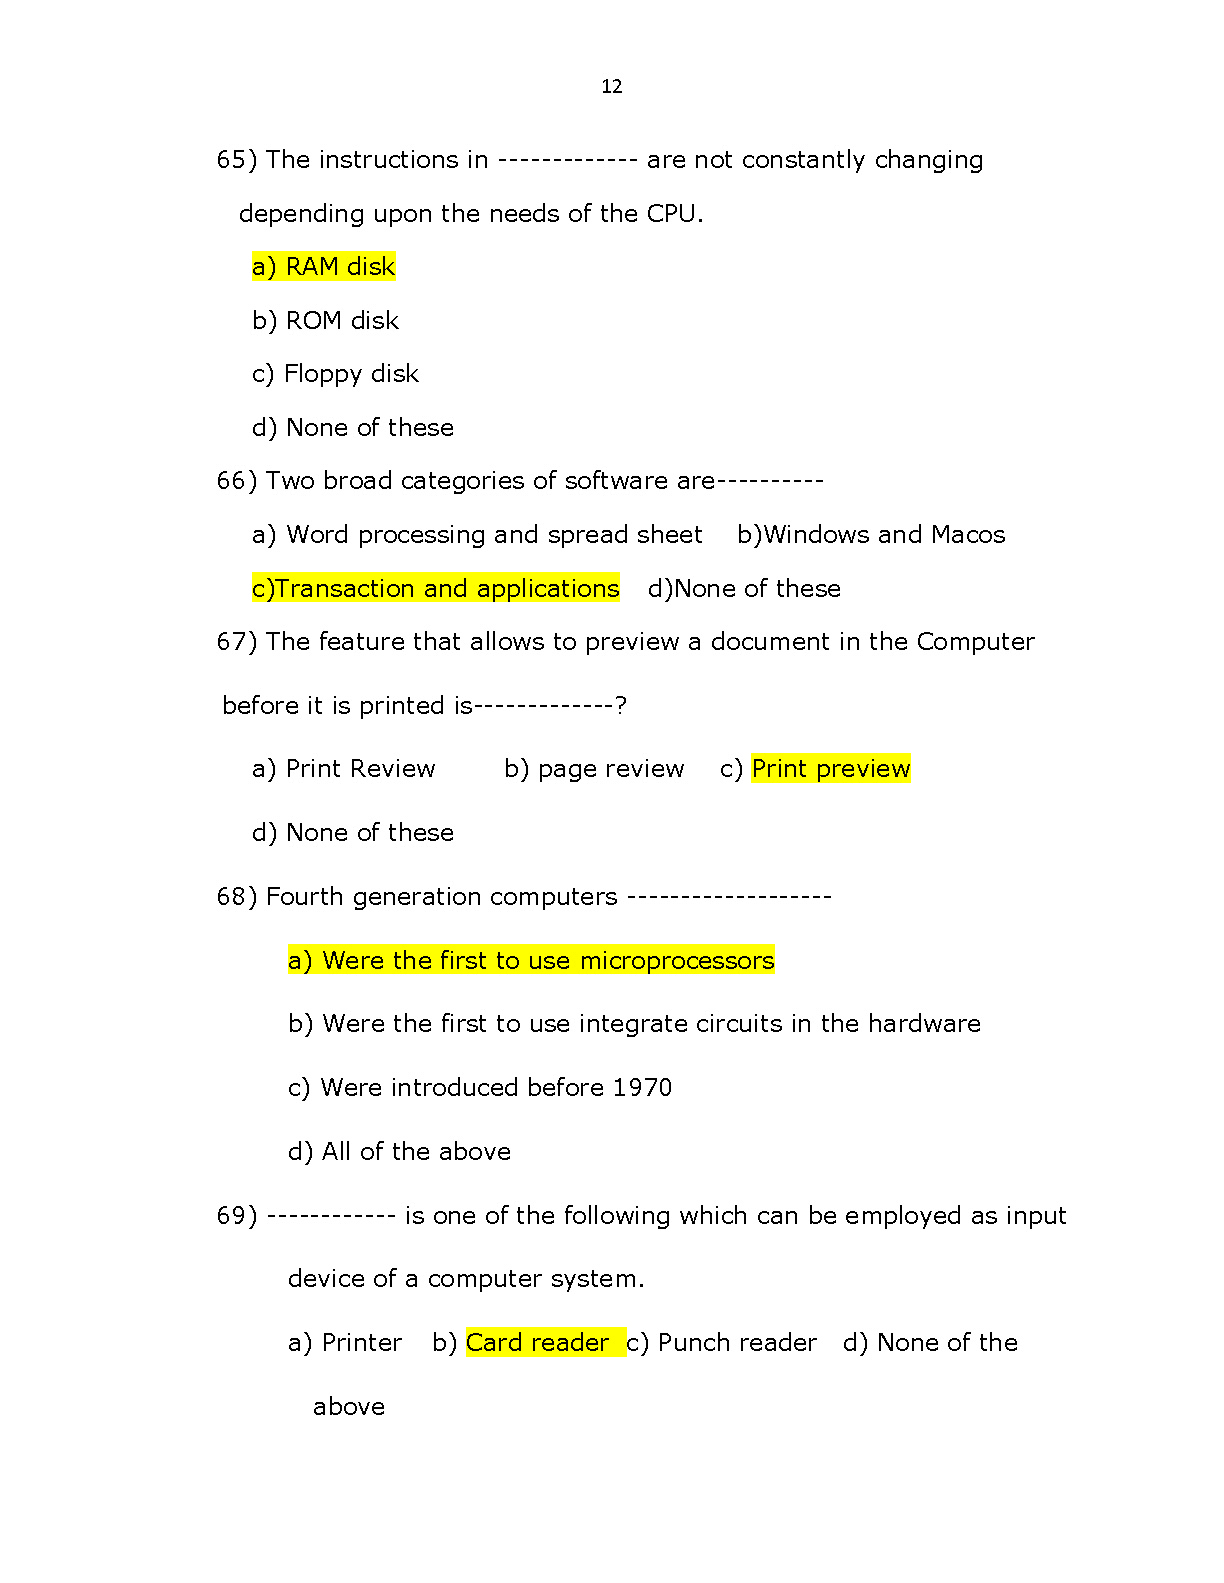 Kerala Co operative bank recruitment Sample Question Paper - Notification Image 12